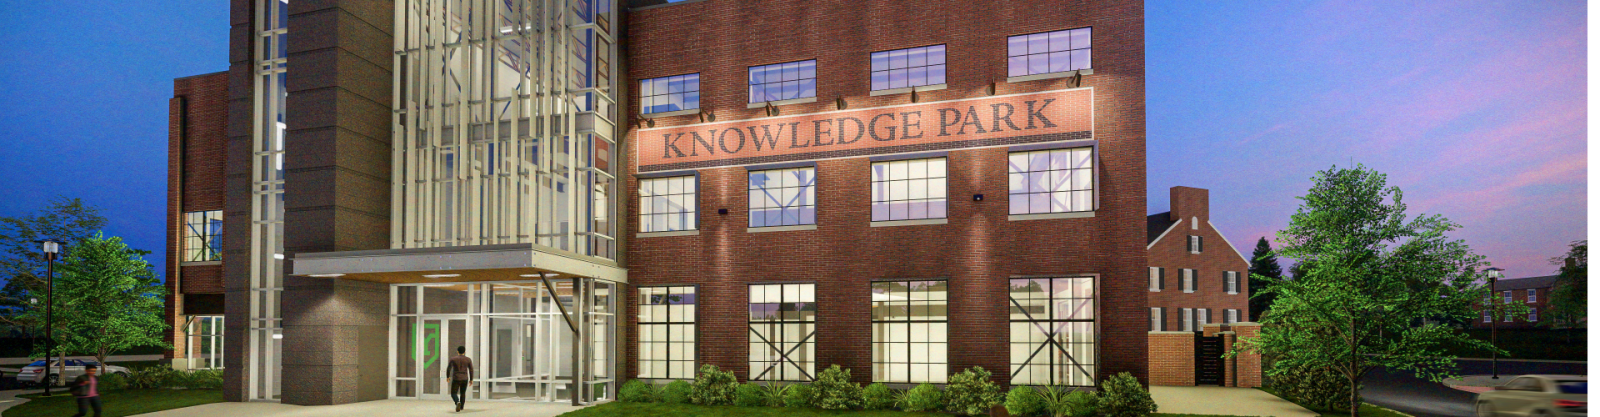 York College of Pennsylvania – Knowledge Park